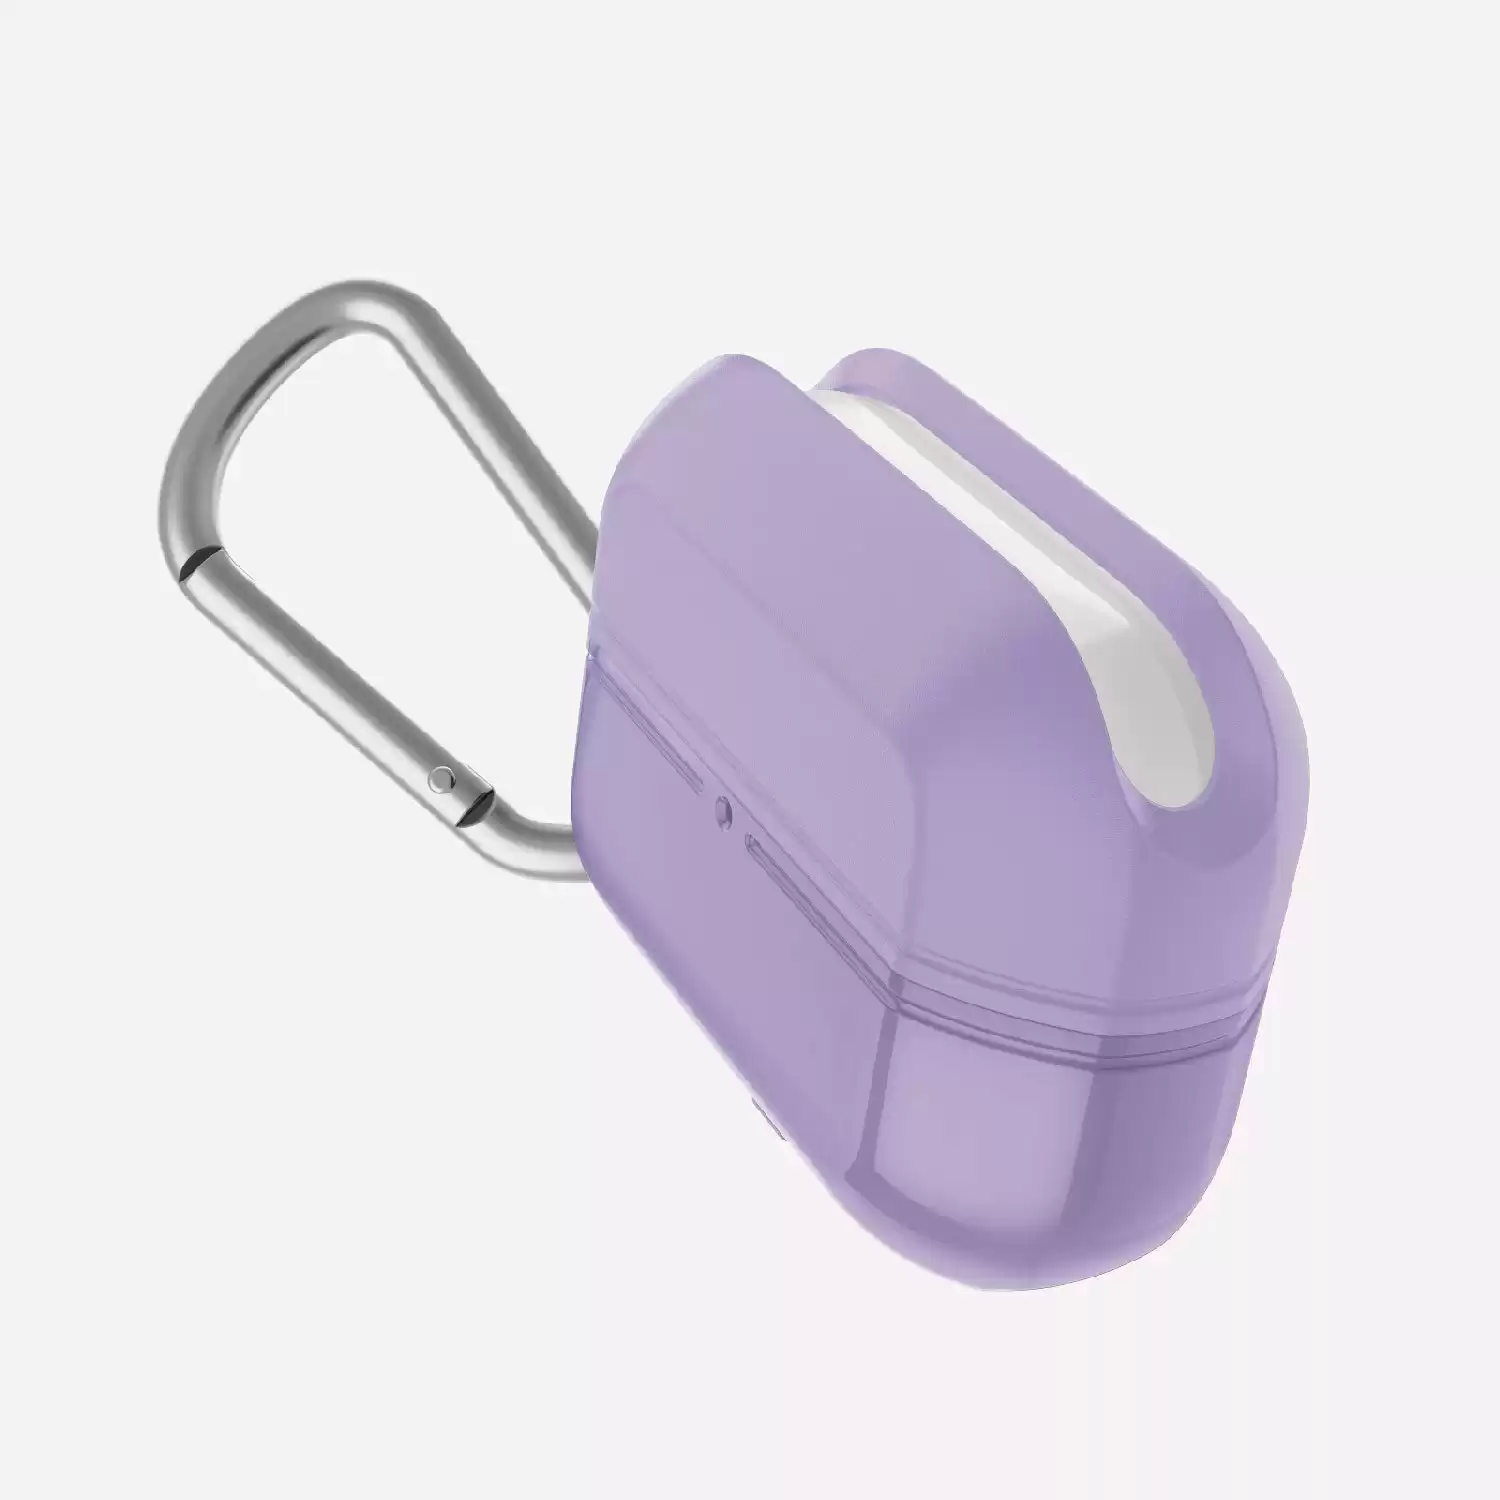 Apple-AirPods-pro-case-raptic-journey-purple-488204-1_1800x1800